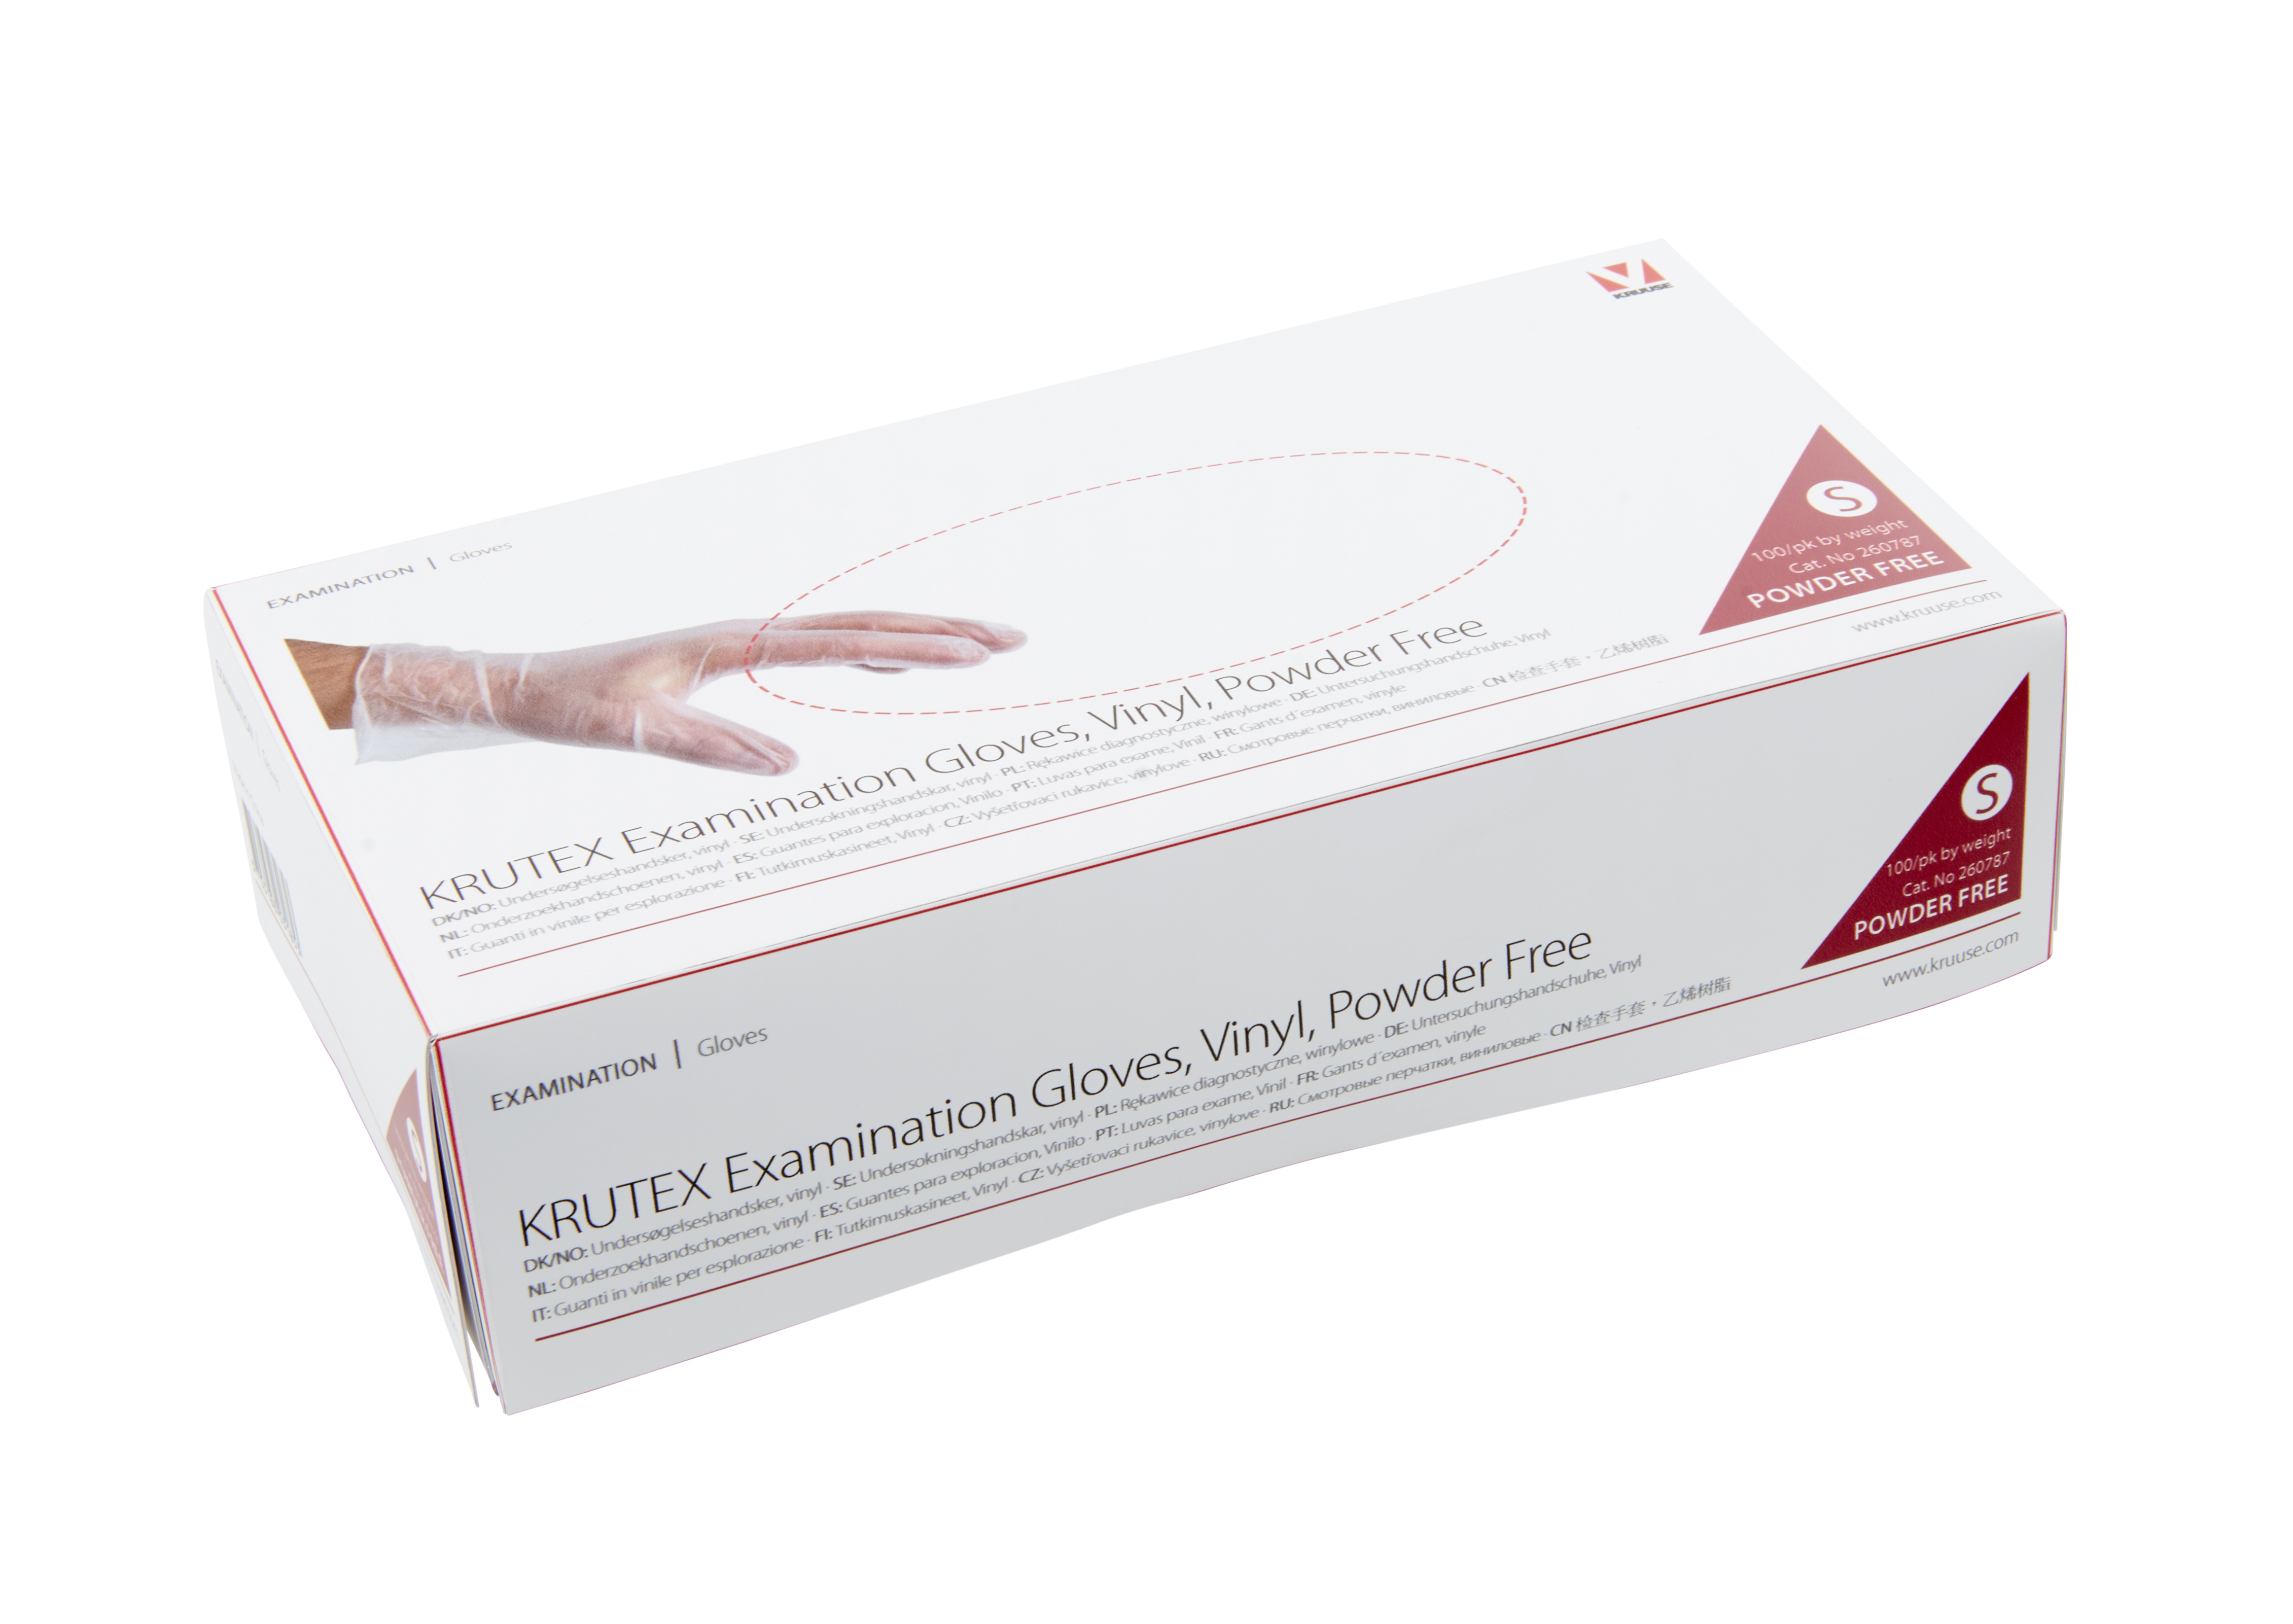 KRUTEX examination gloves, Vinyl, powder free, large, 100/pk